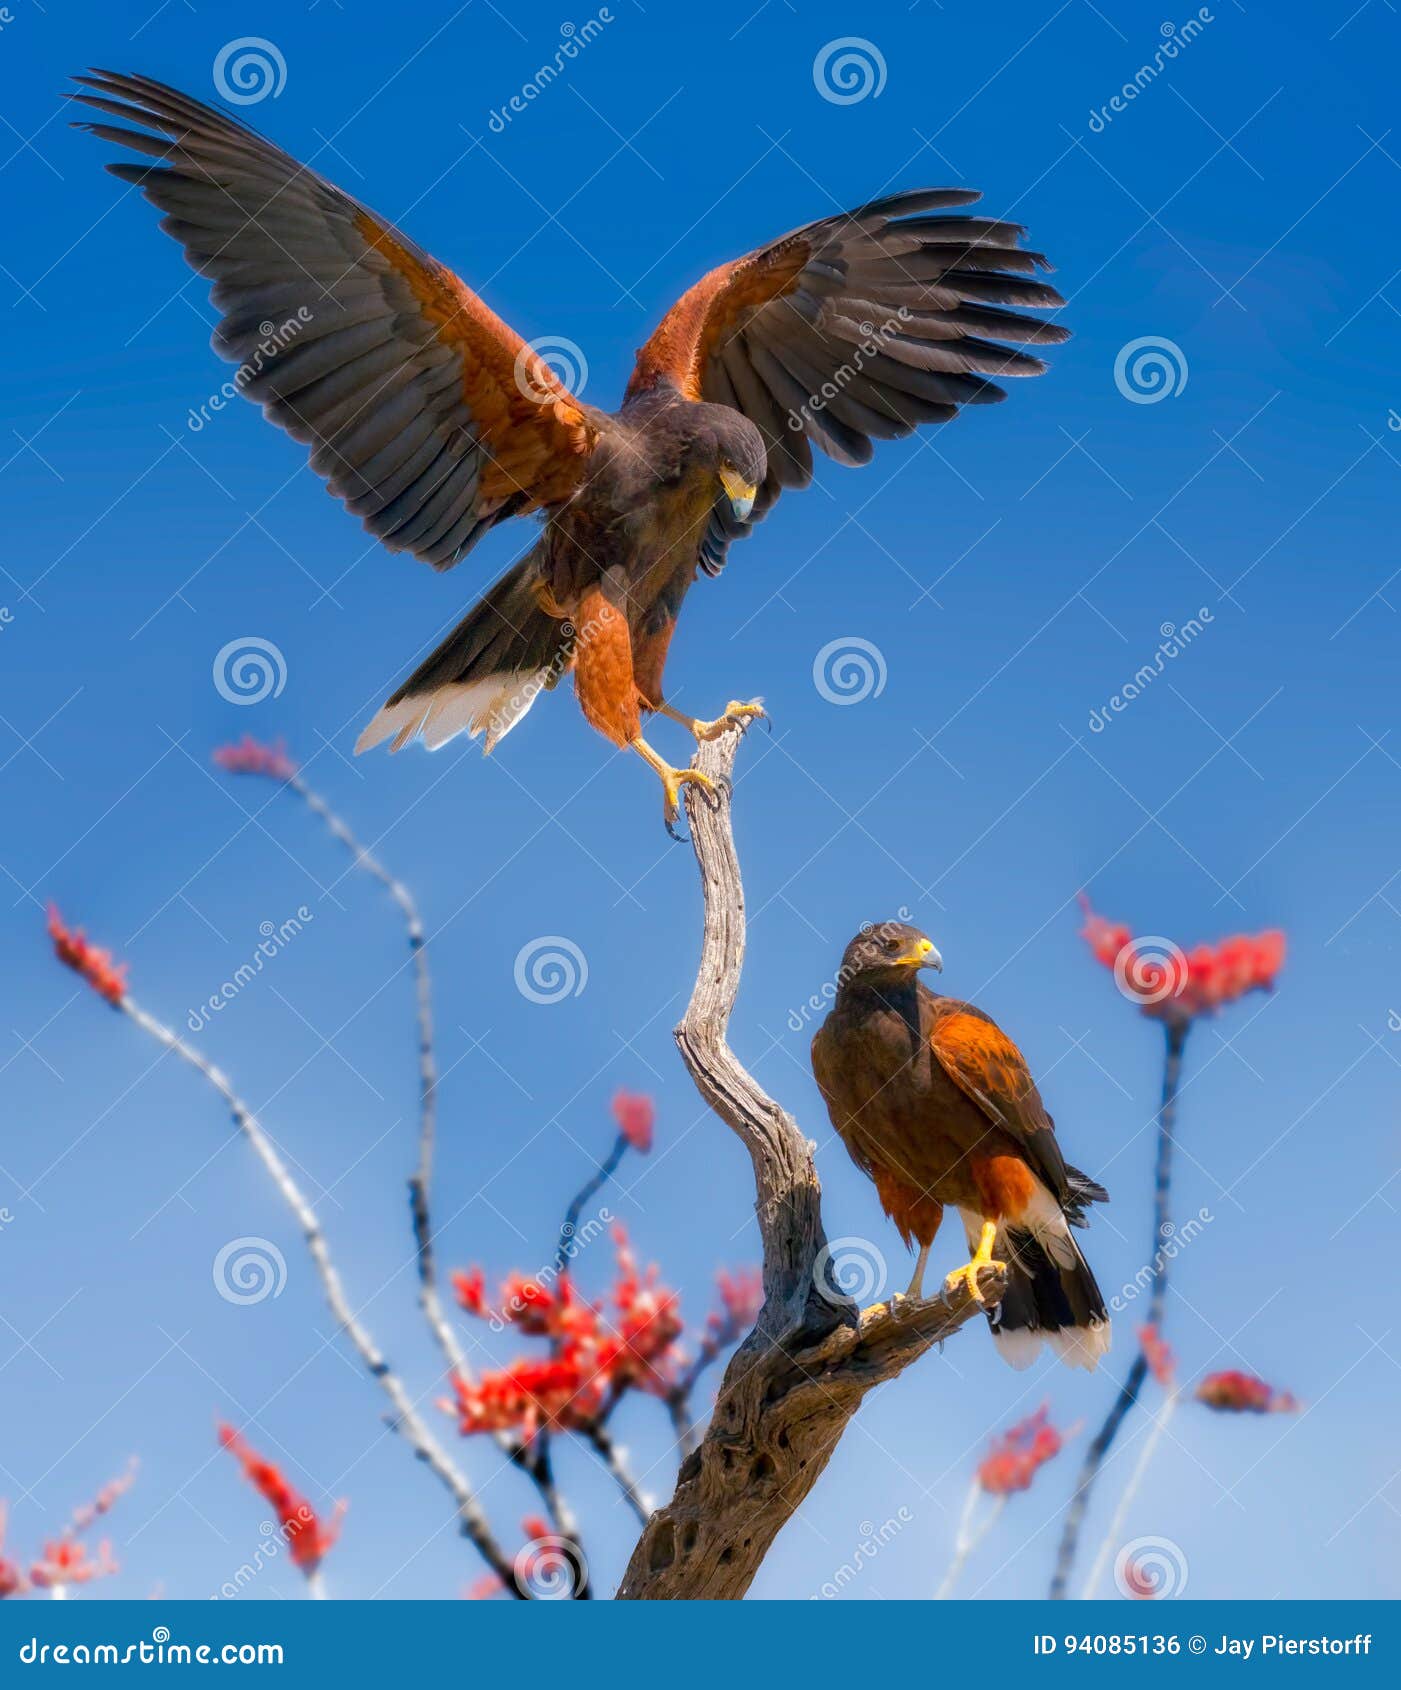 harris hawks on ocotillo branches